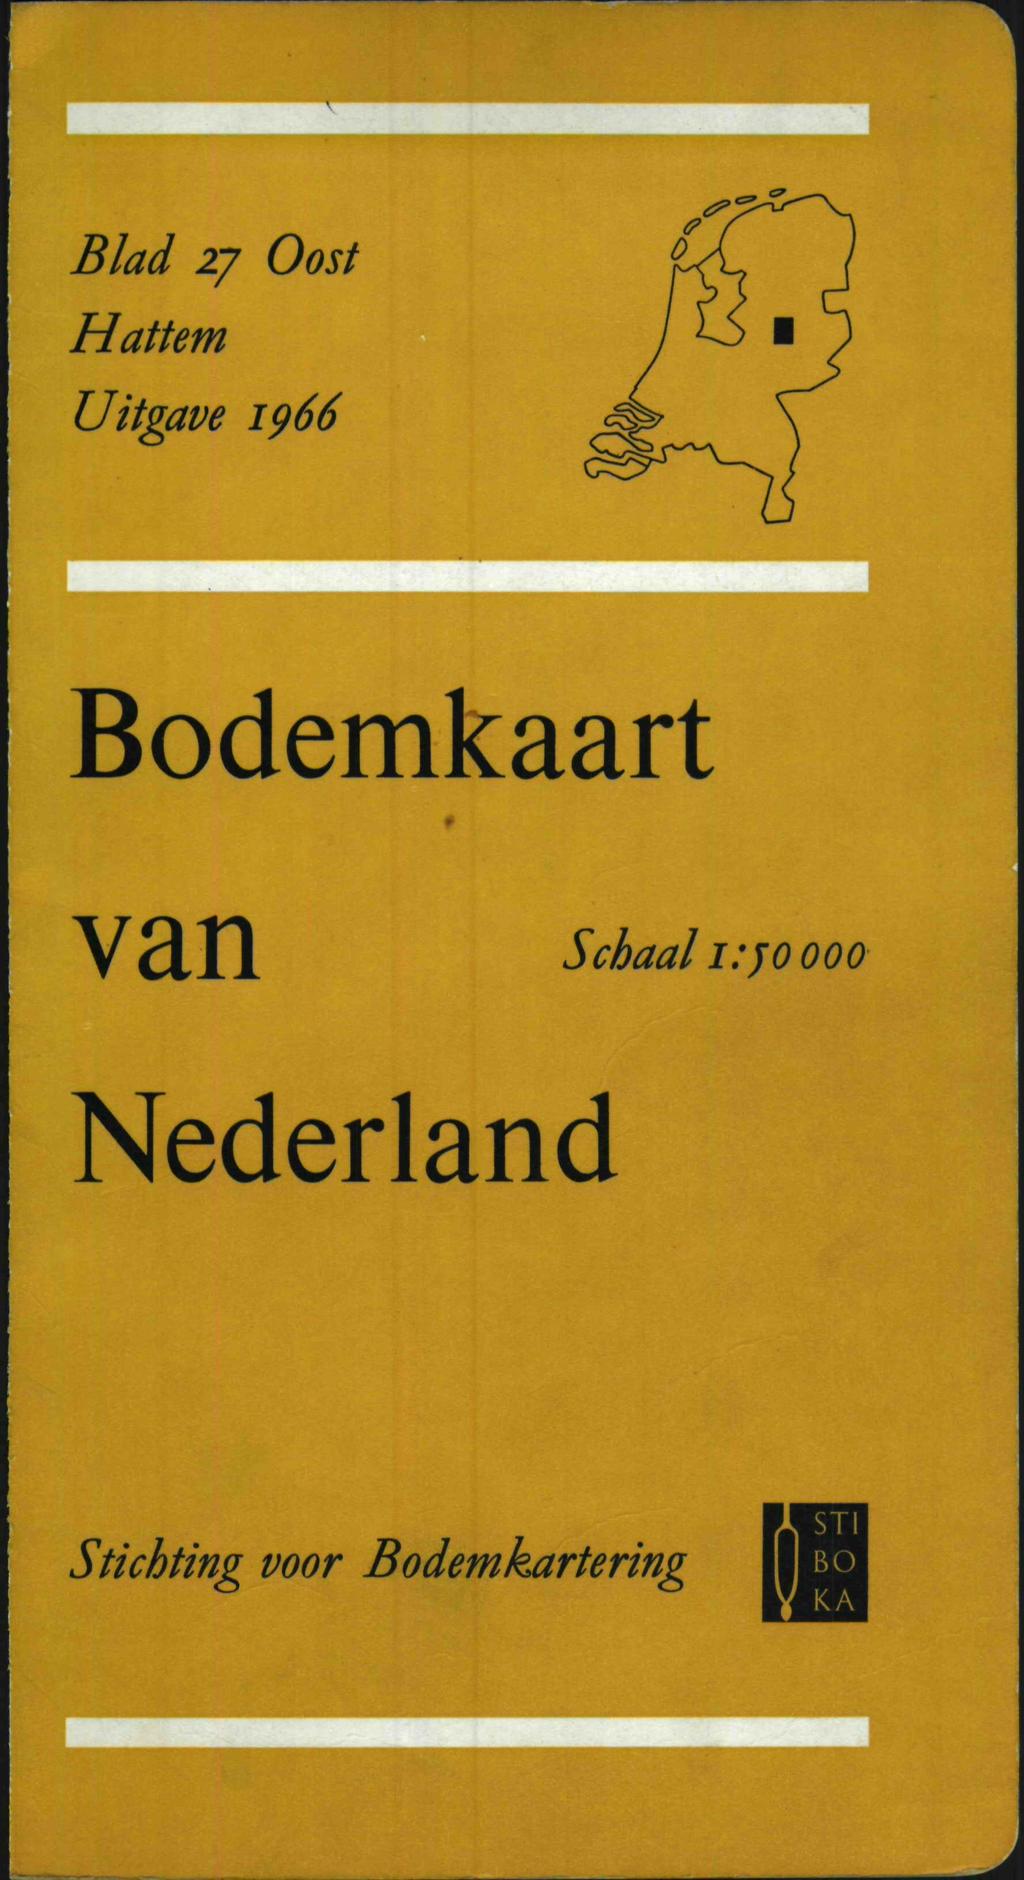 Blad 7 Oost Hattem Uitgave 1966 Bodemkaart van